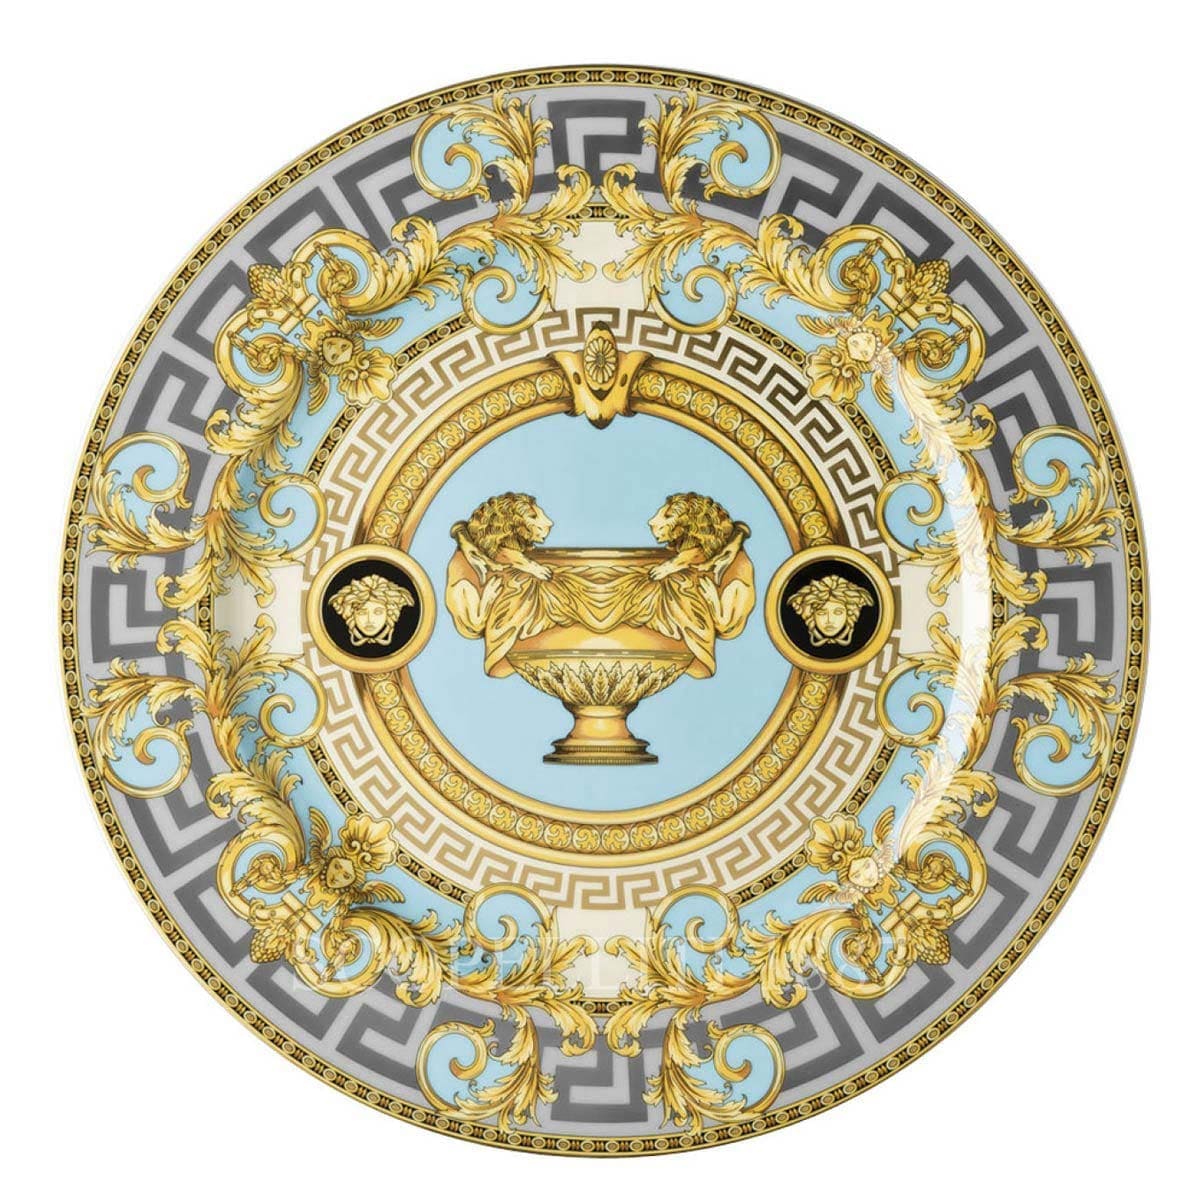 Versace Prestige Gala Le Bleu 2 Service Plate  30 cm  by Rosenthal